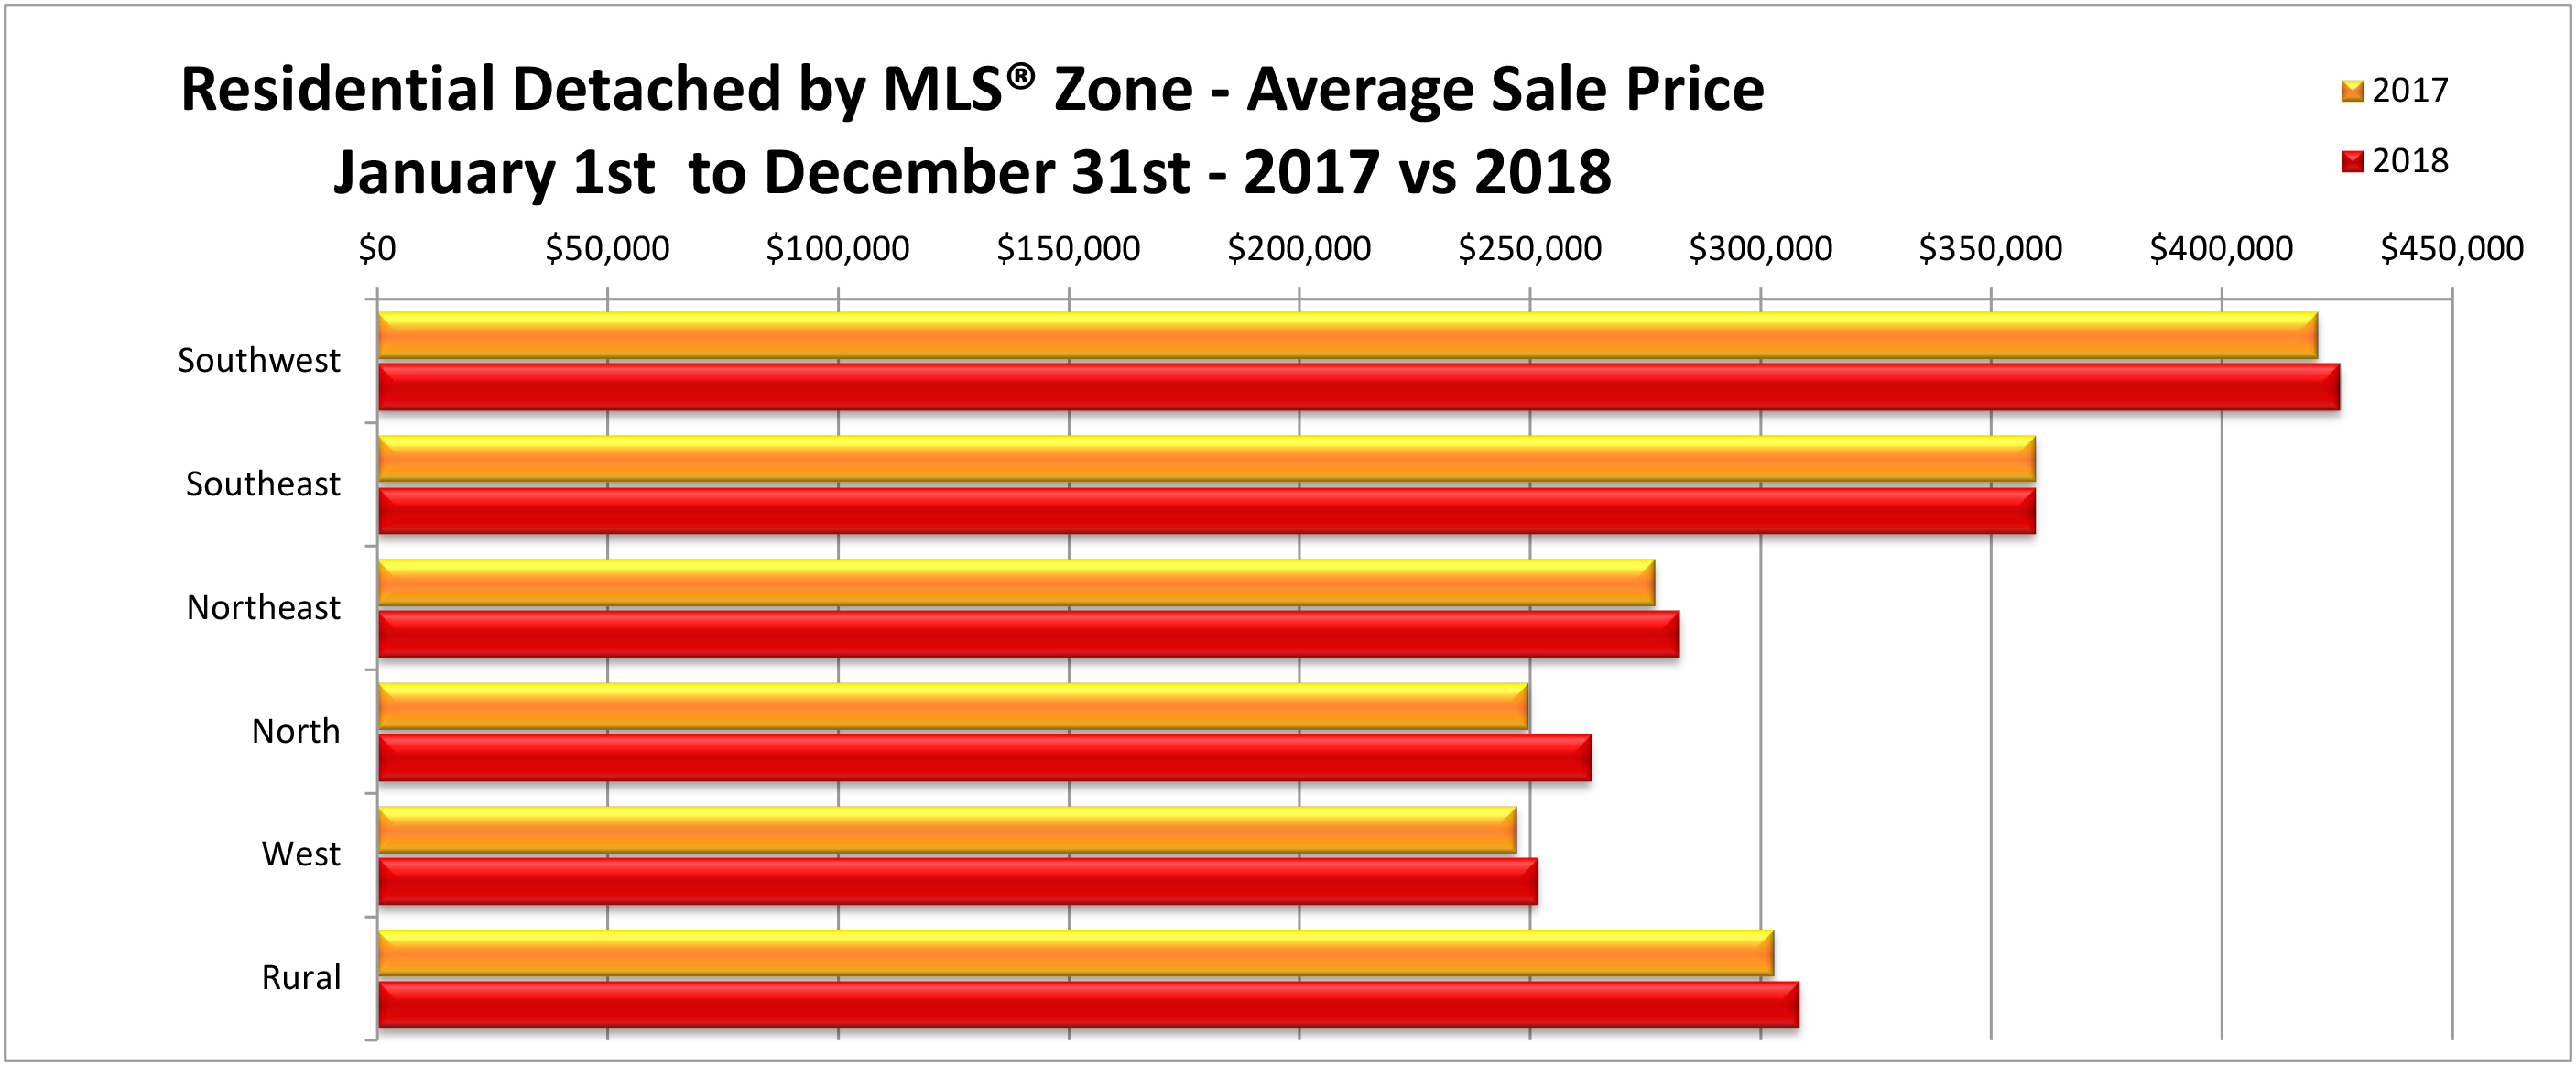 Residential Detached by Zone - Average Price YTD December 2018.jpg (975 KB)